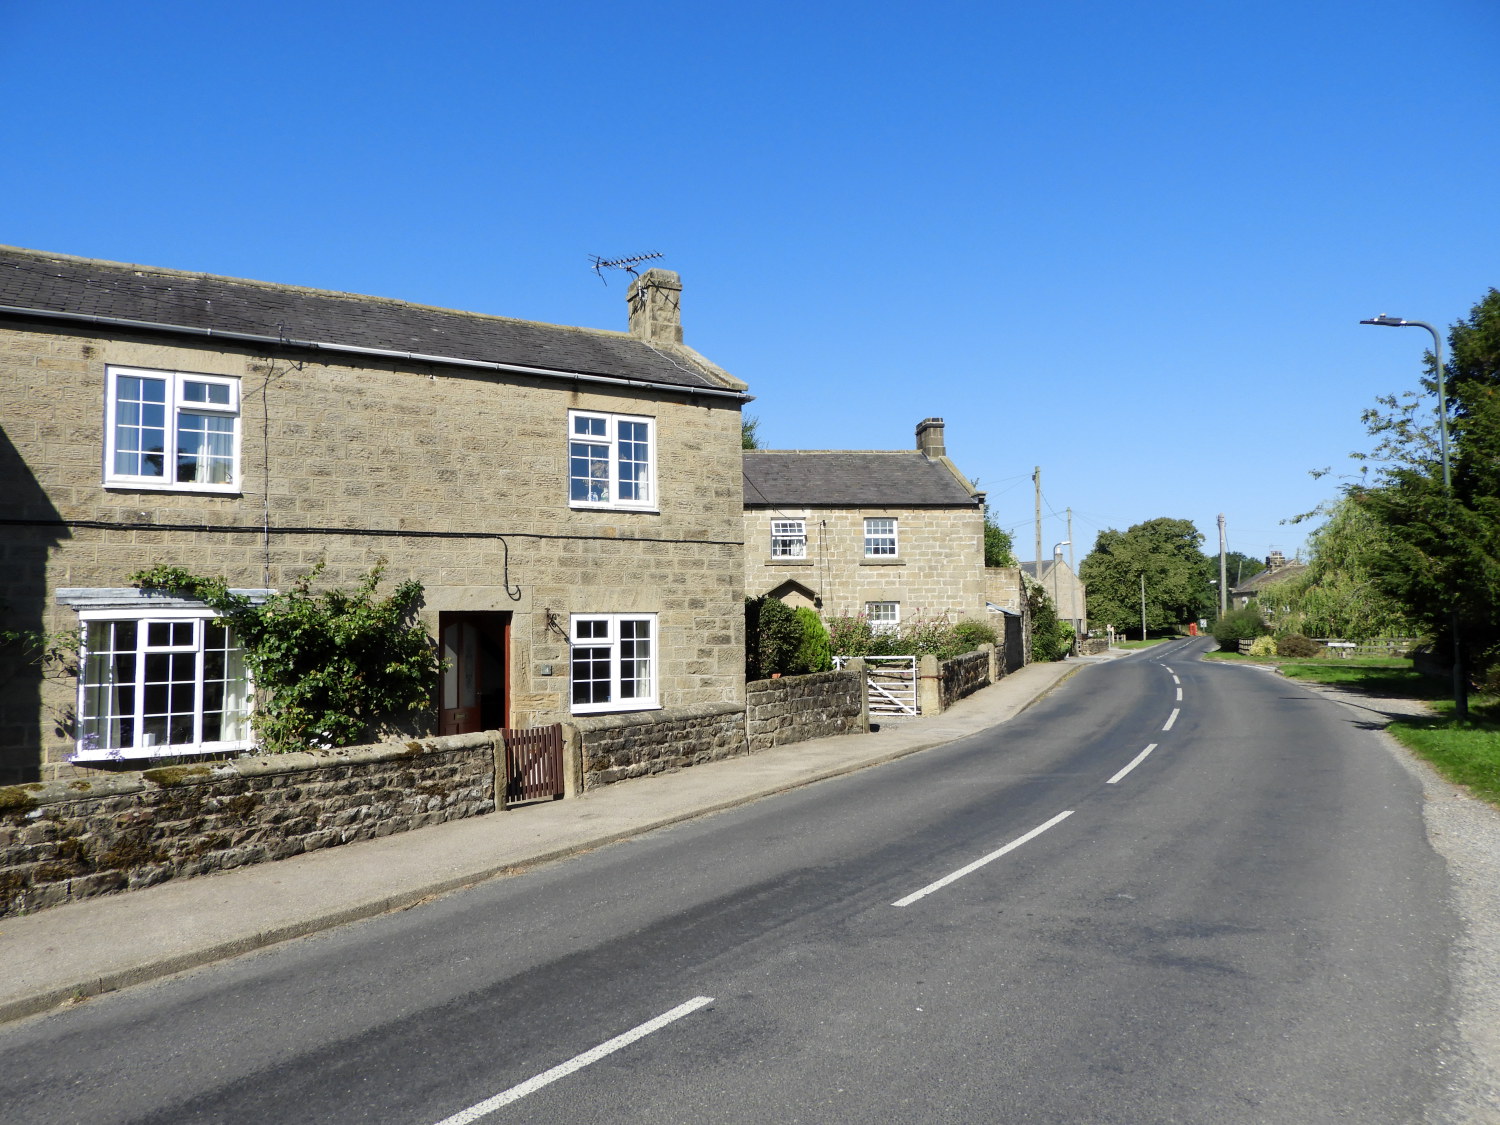 The village of Sawley